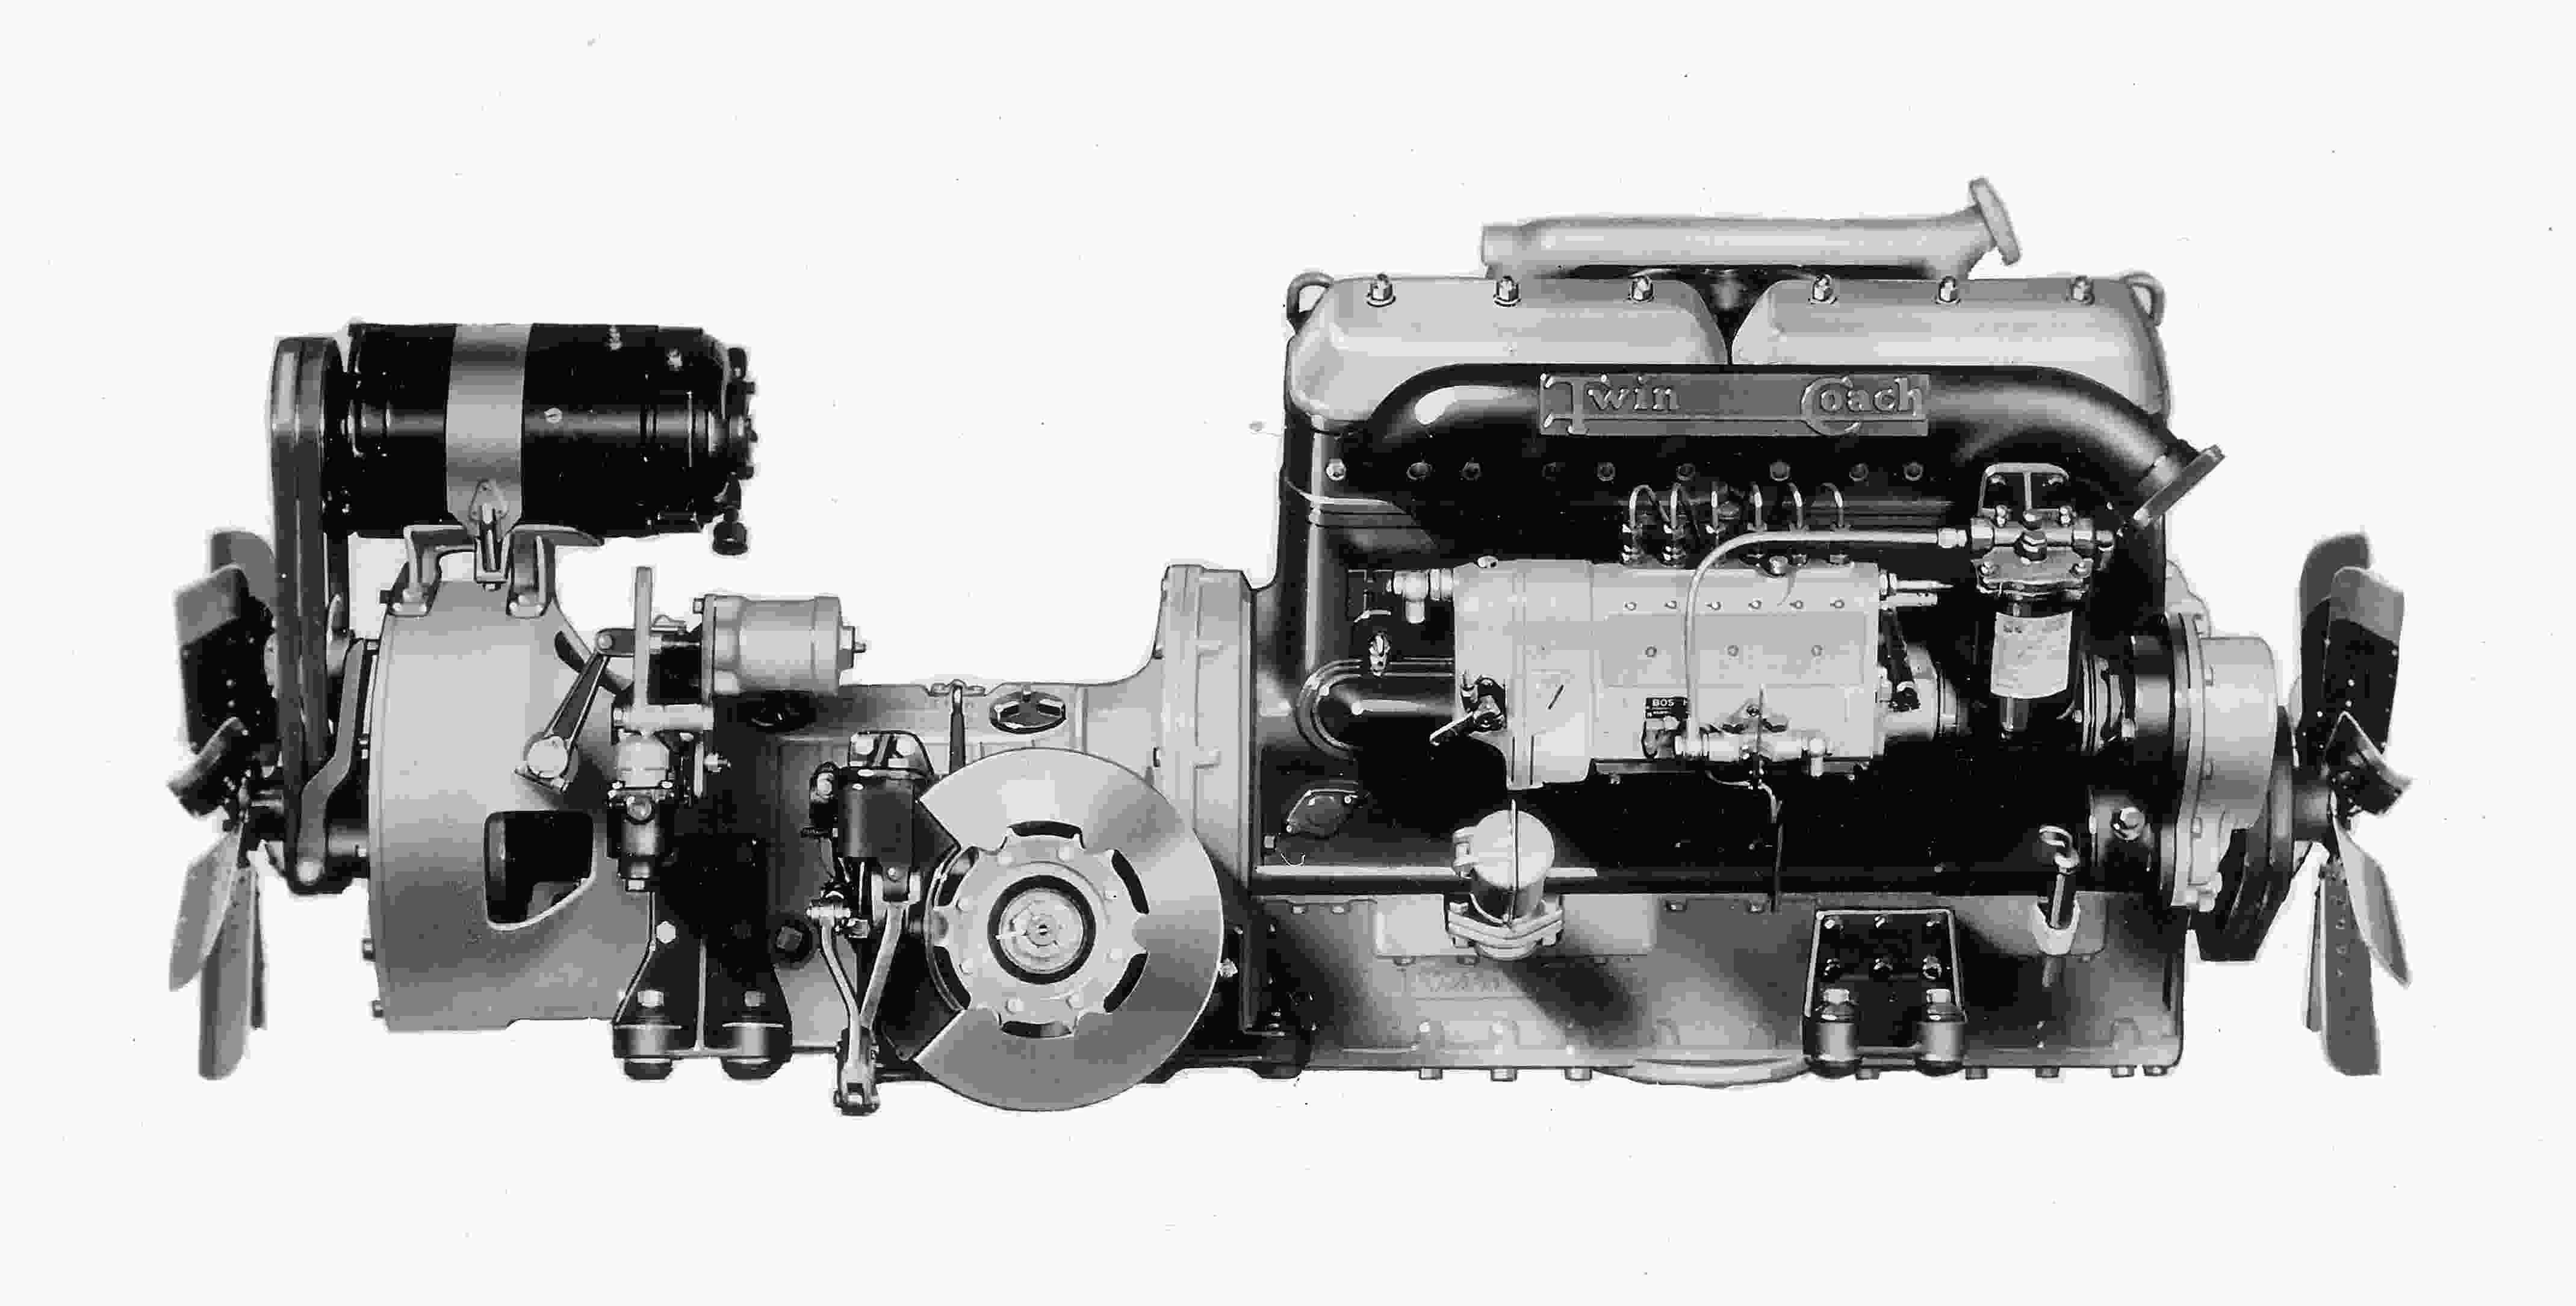 [1935 Twin Coach diesel engine by Hercules]